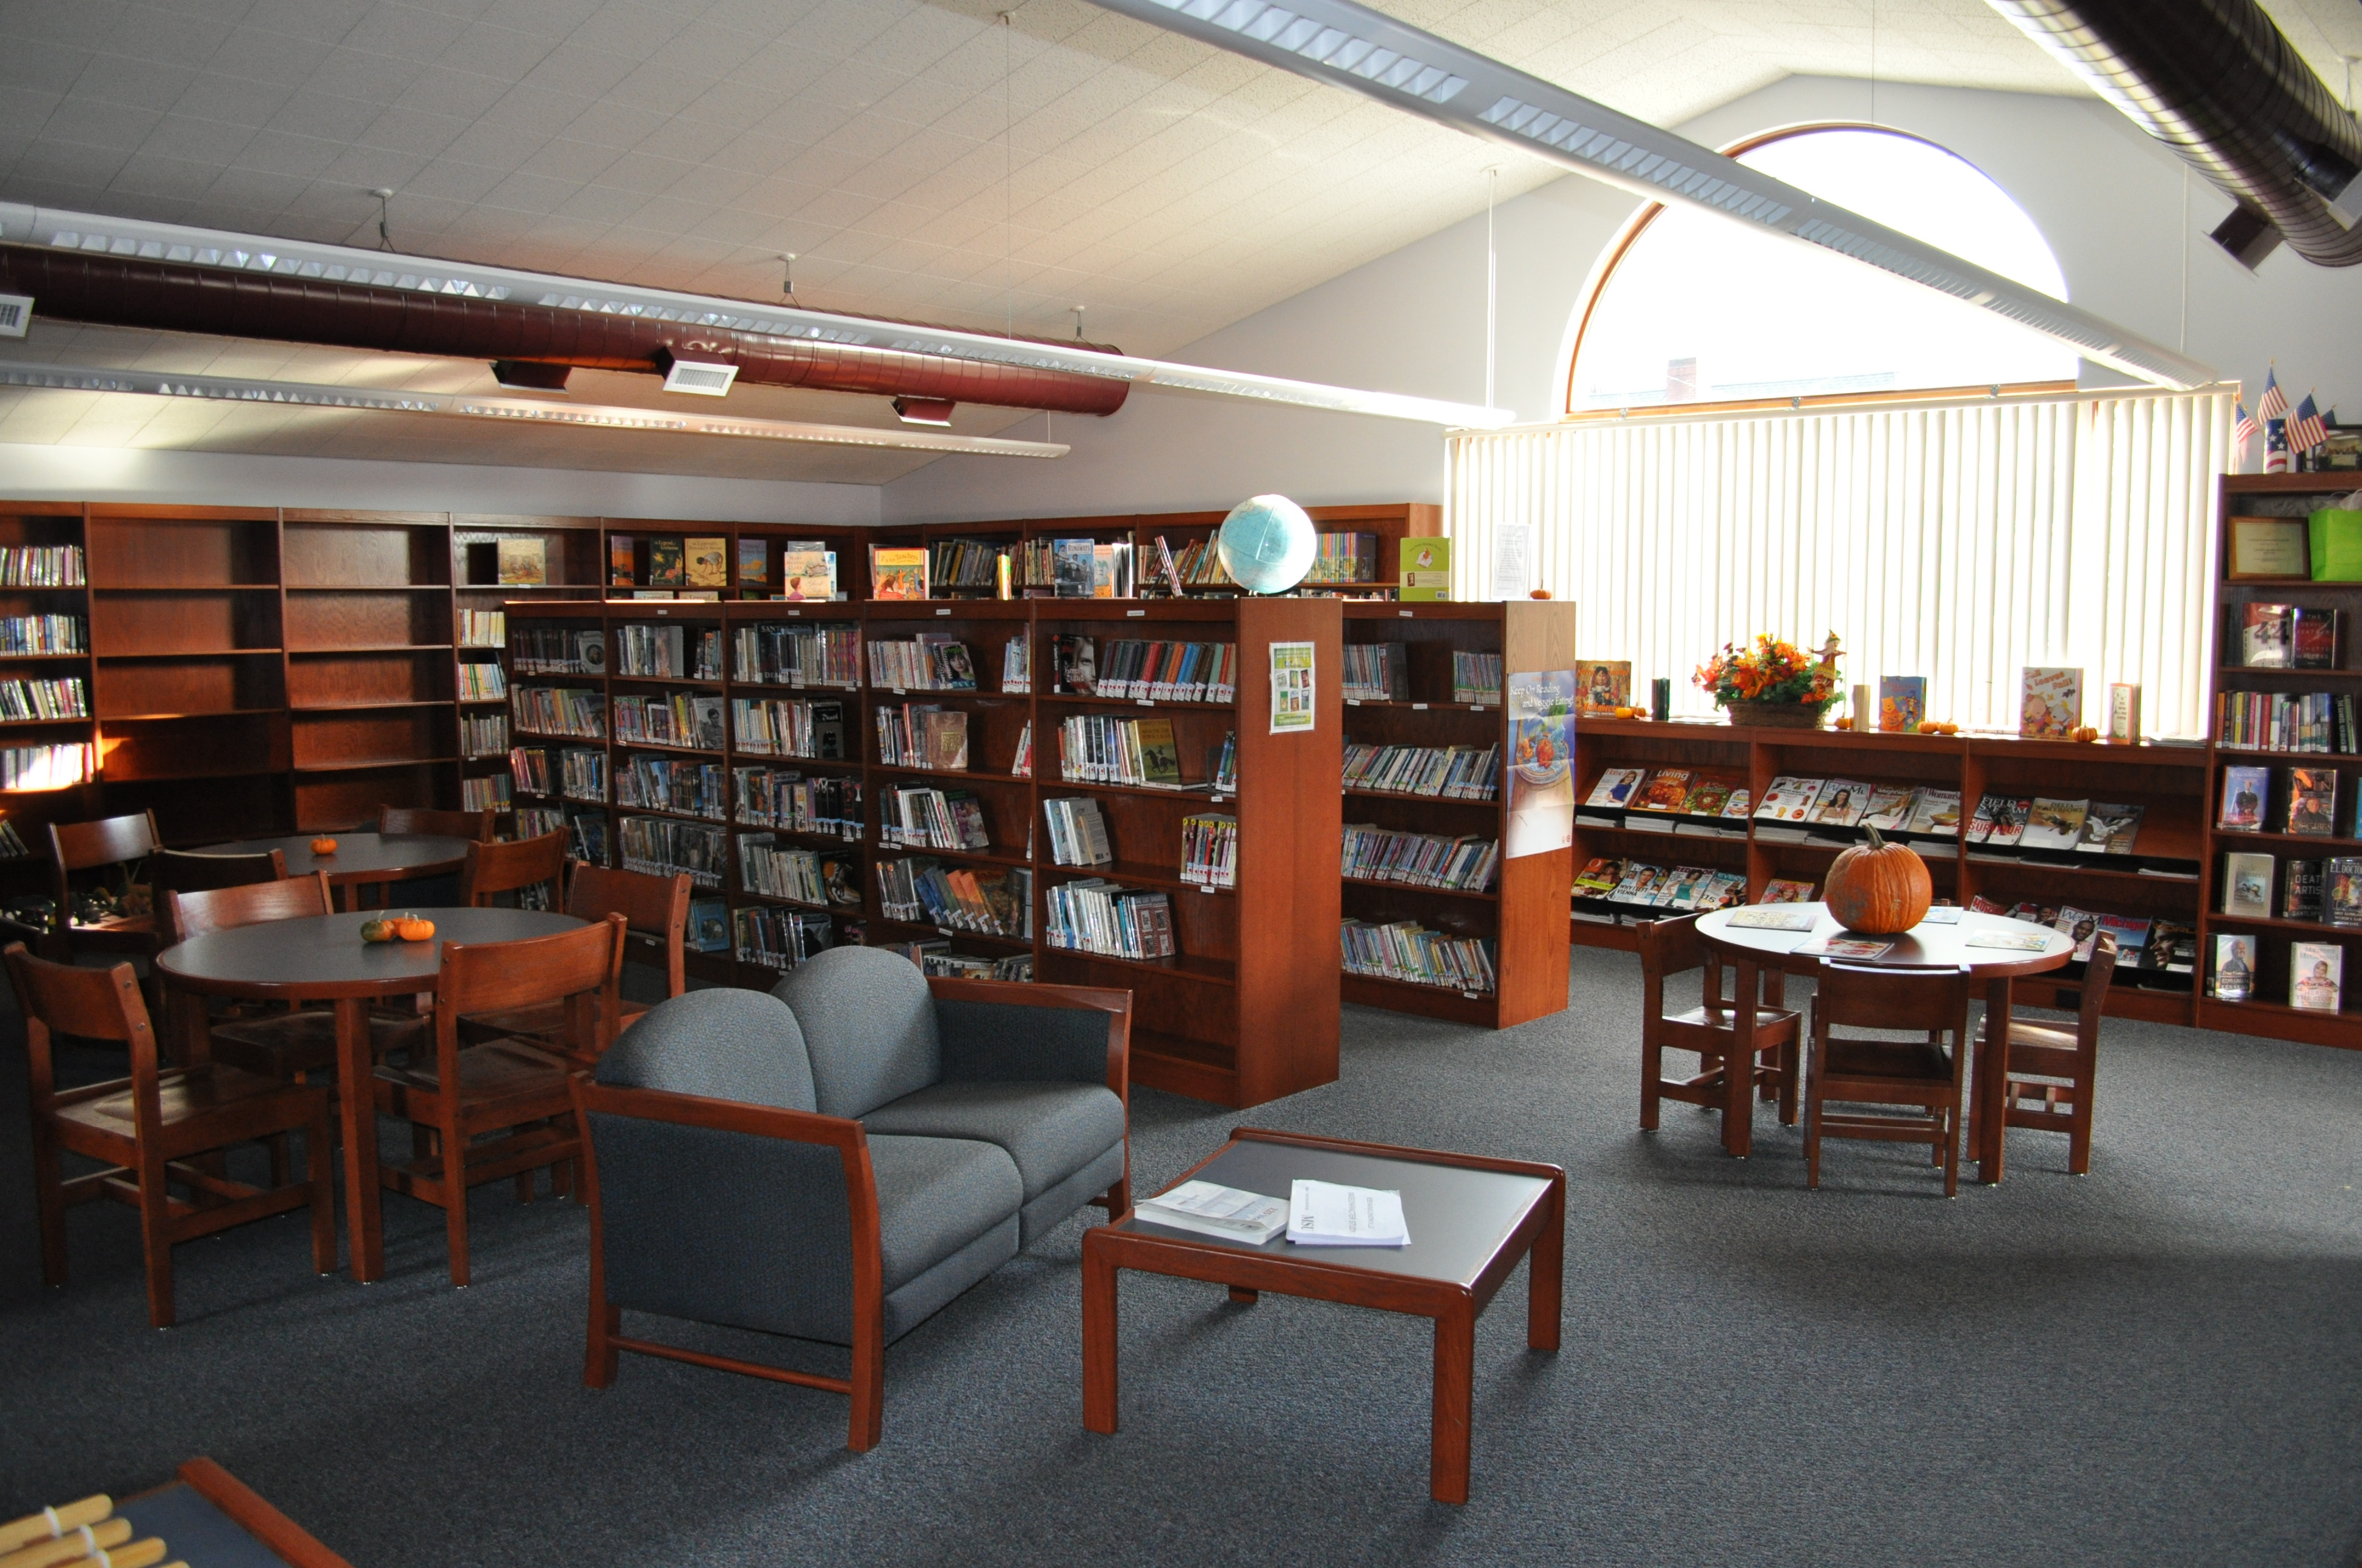 renovated library interior.JPG